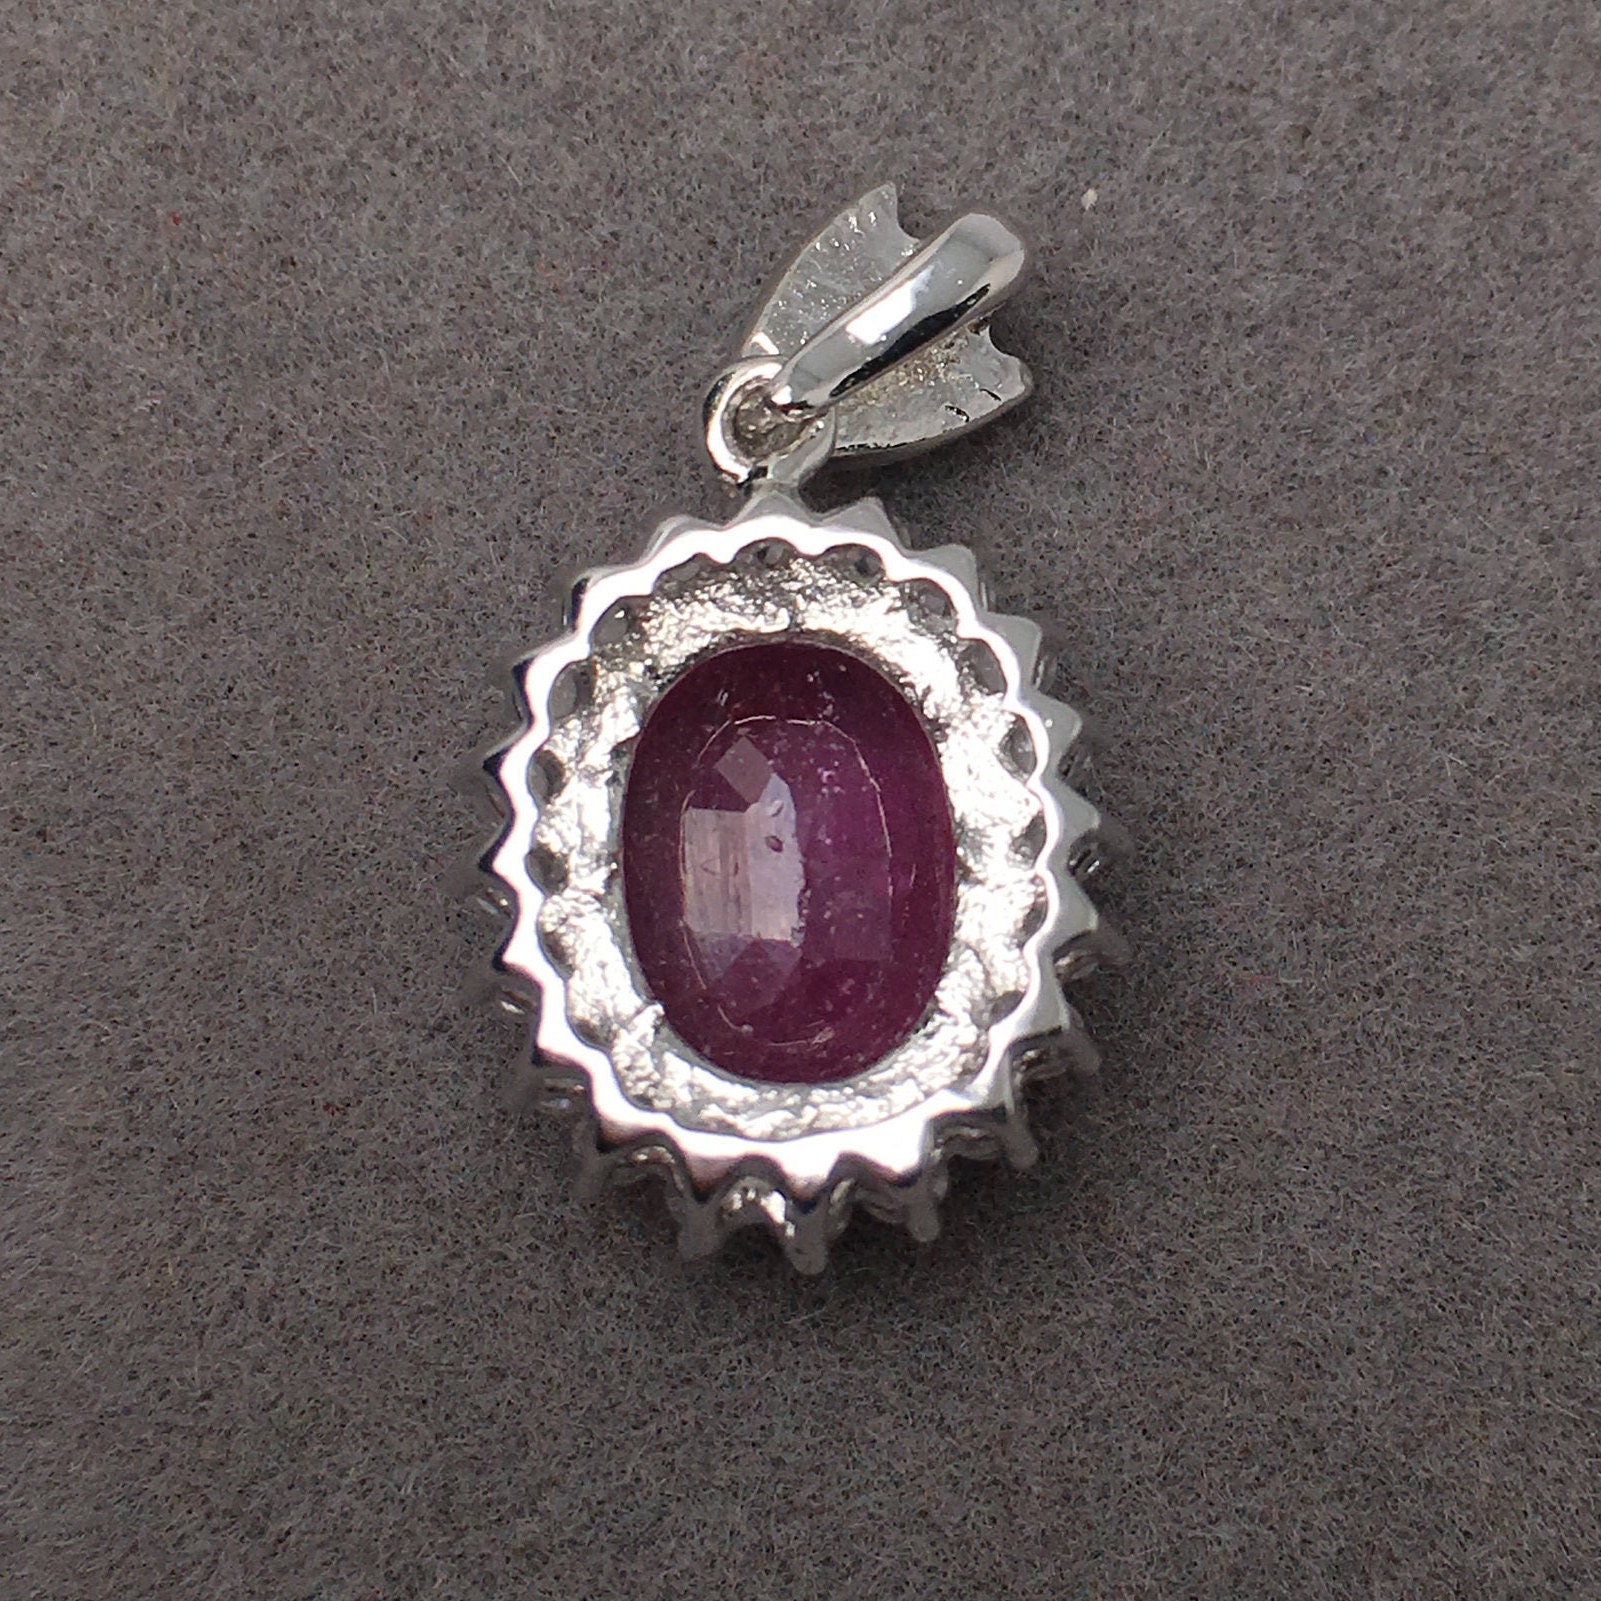 Vintage Style Ruby Pendant Ruby Jewelry Gemstone Pendant - Etsy